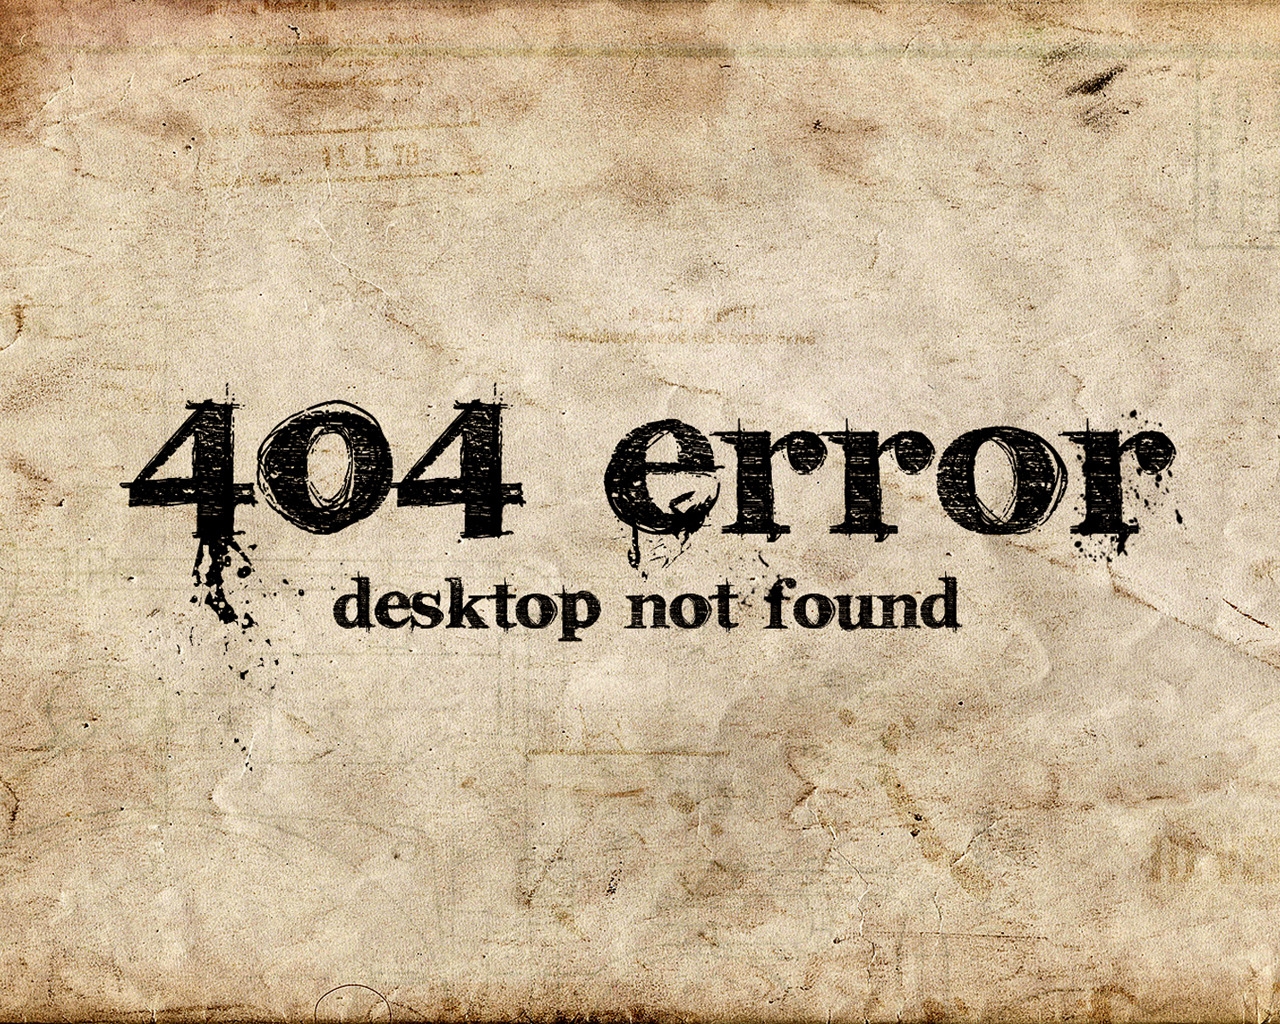 Error 404 for 1280 x 1024 resolution